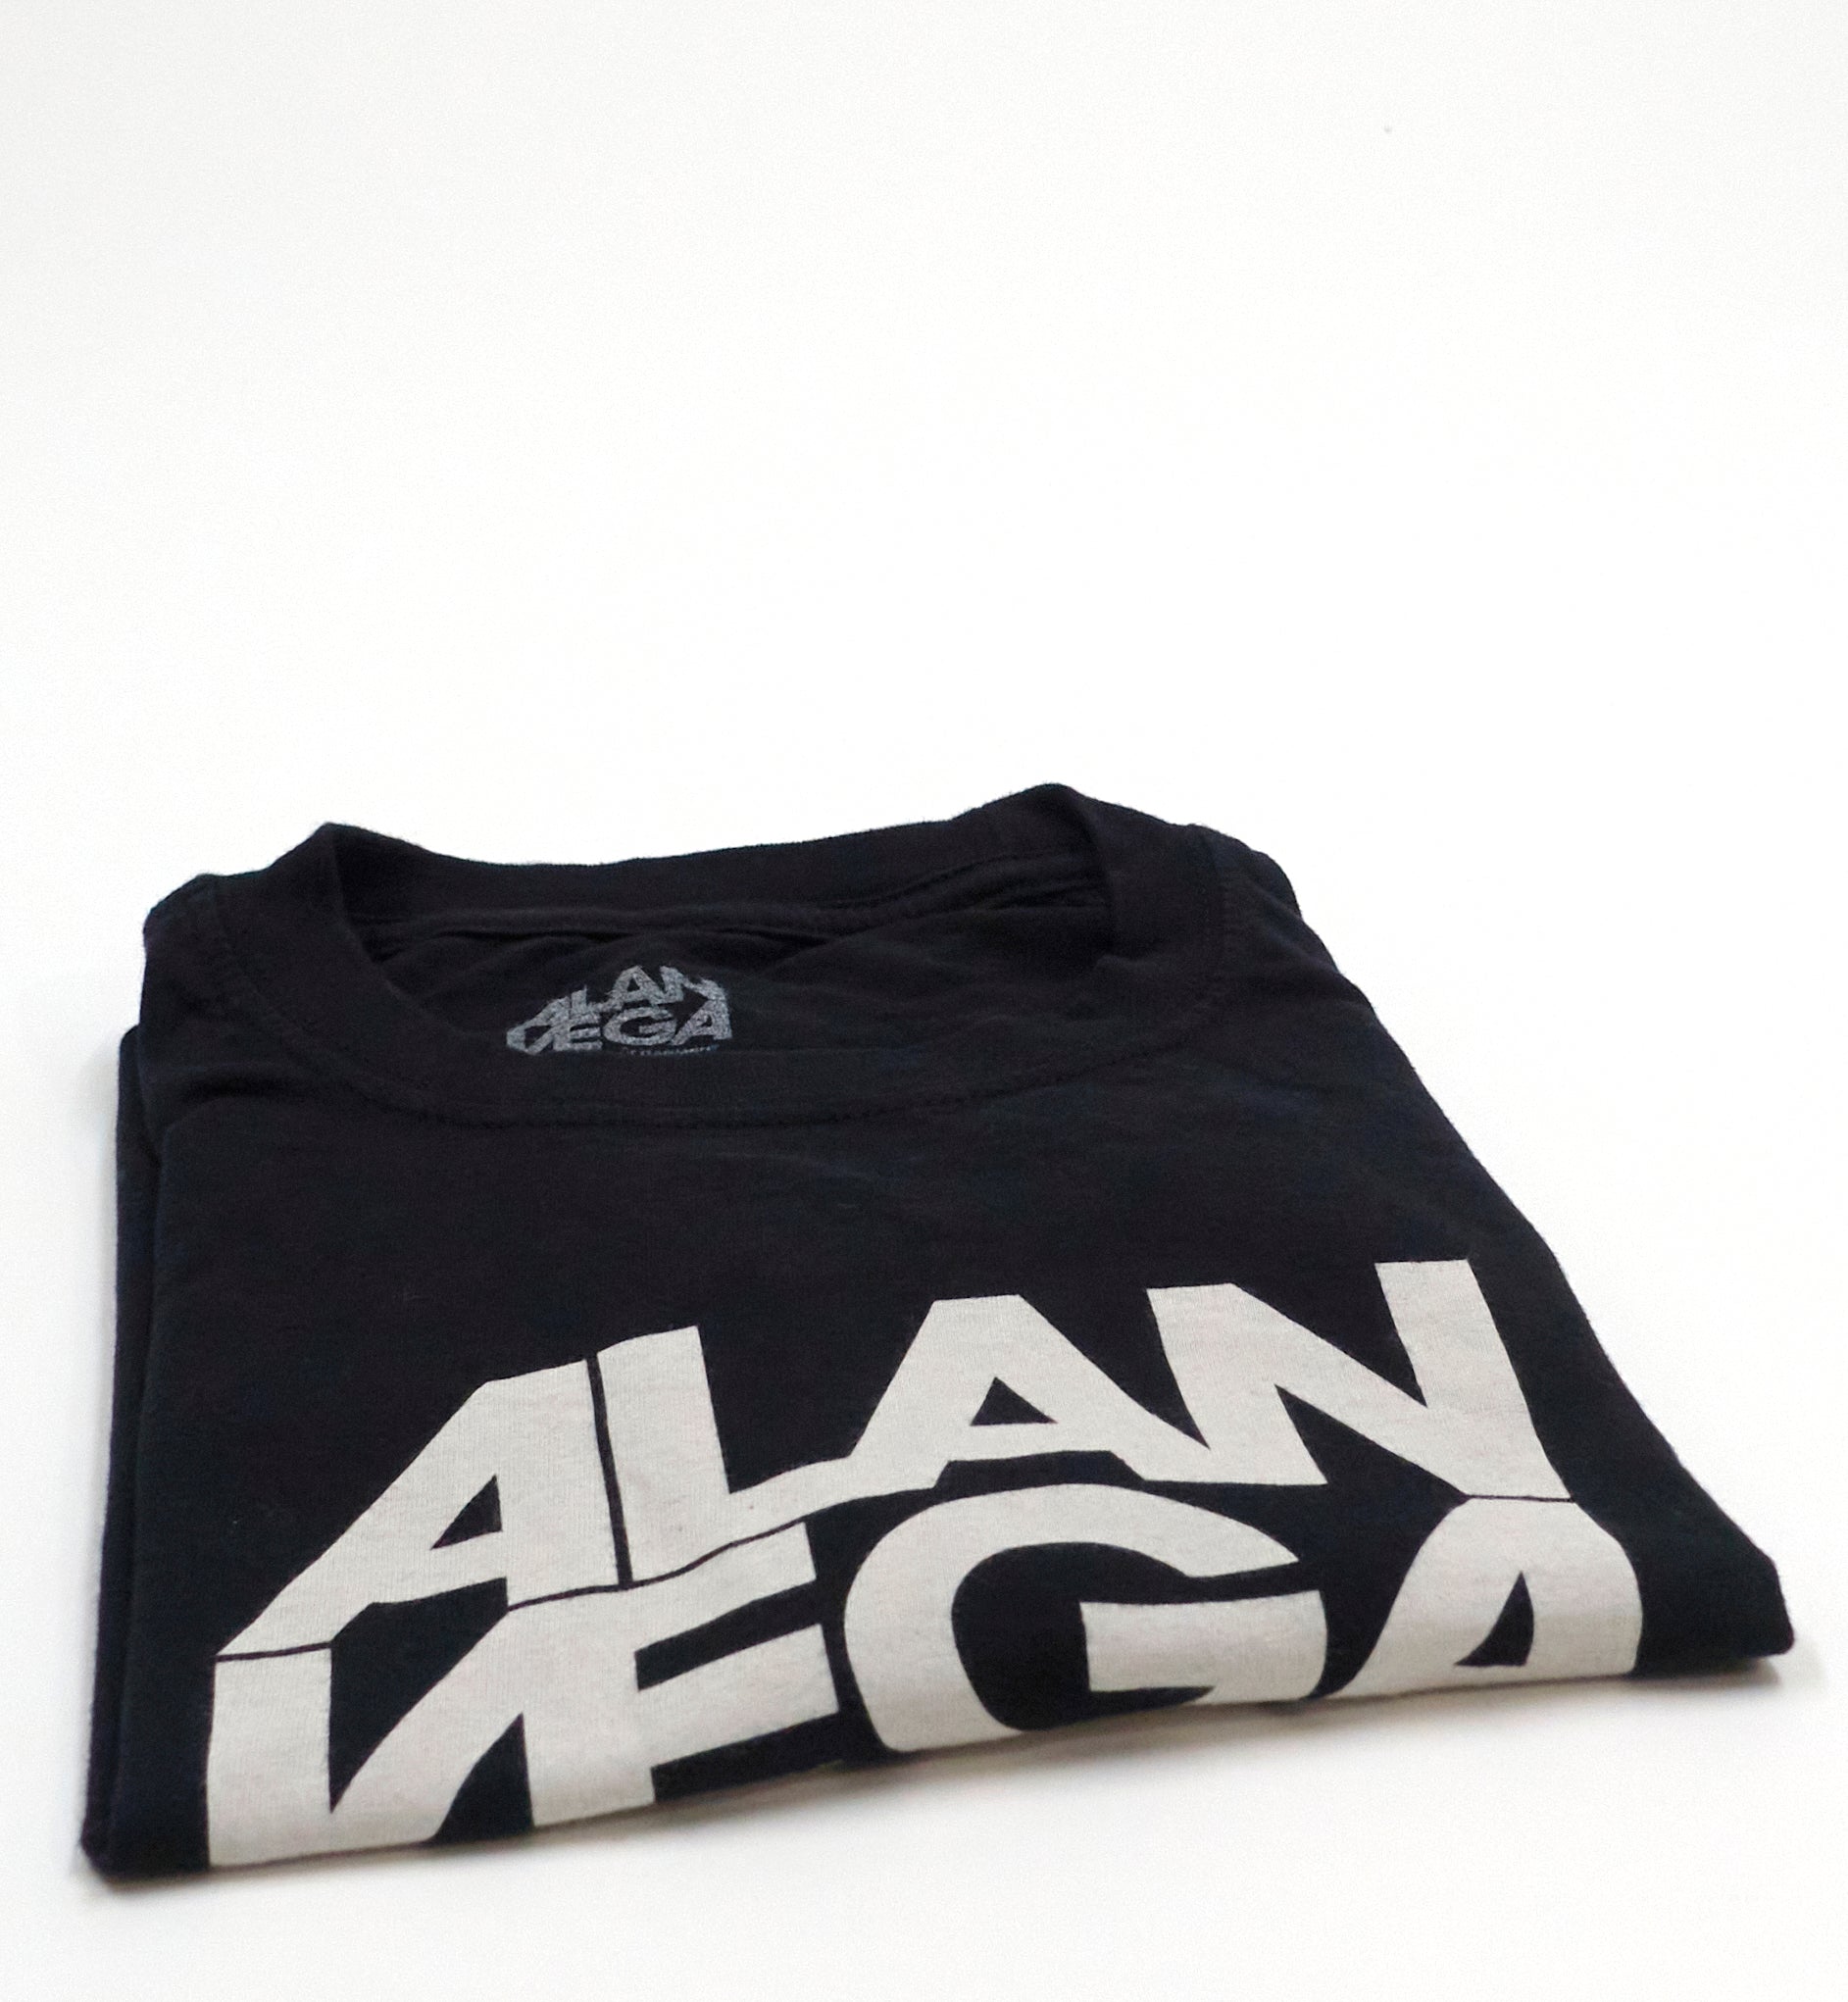 Alan Vega – Mutator 2021 Tour Shirt Size Small